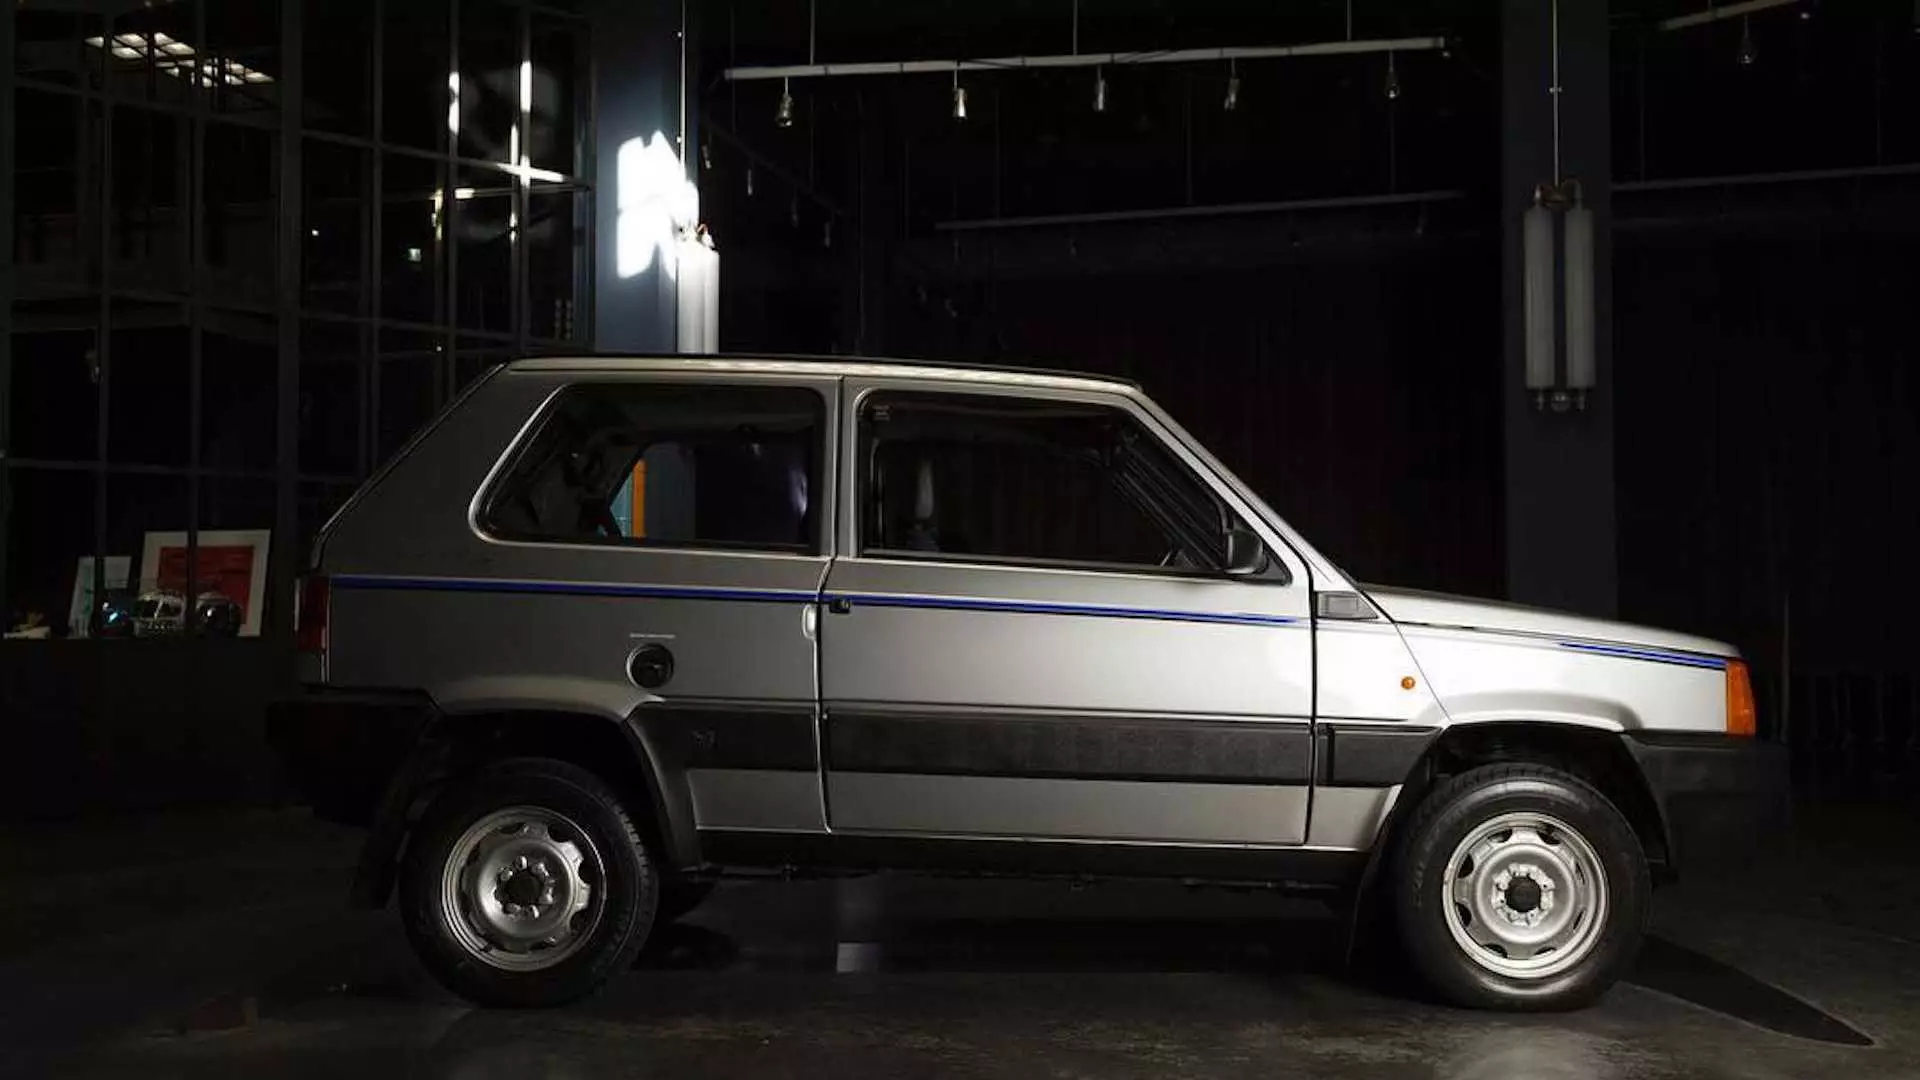 Fiat Panda 4x4 ta Gianni "L'Avvocato" Agnelli ta Garage Italia Customs